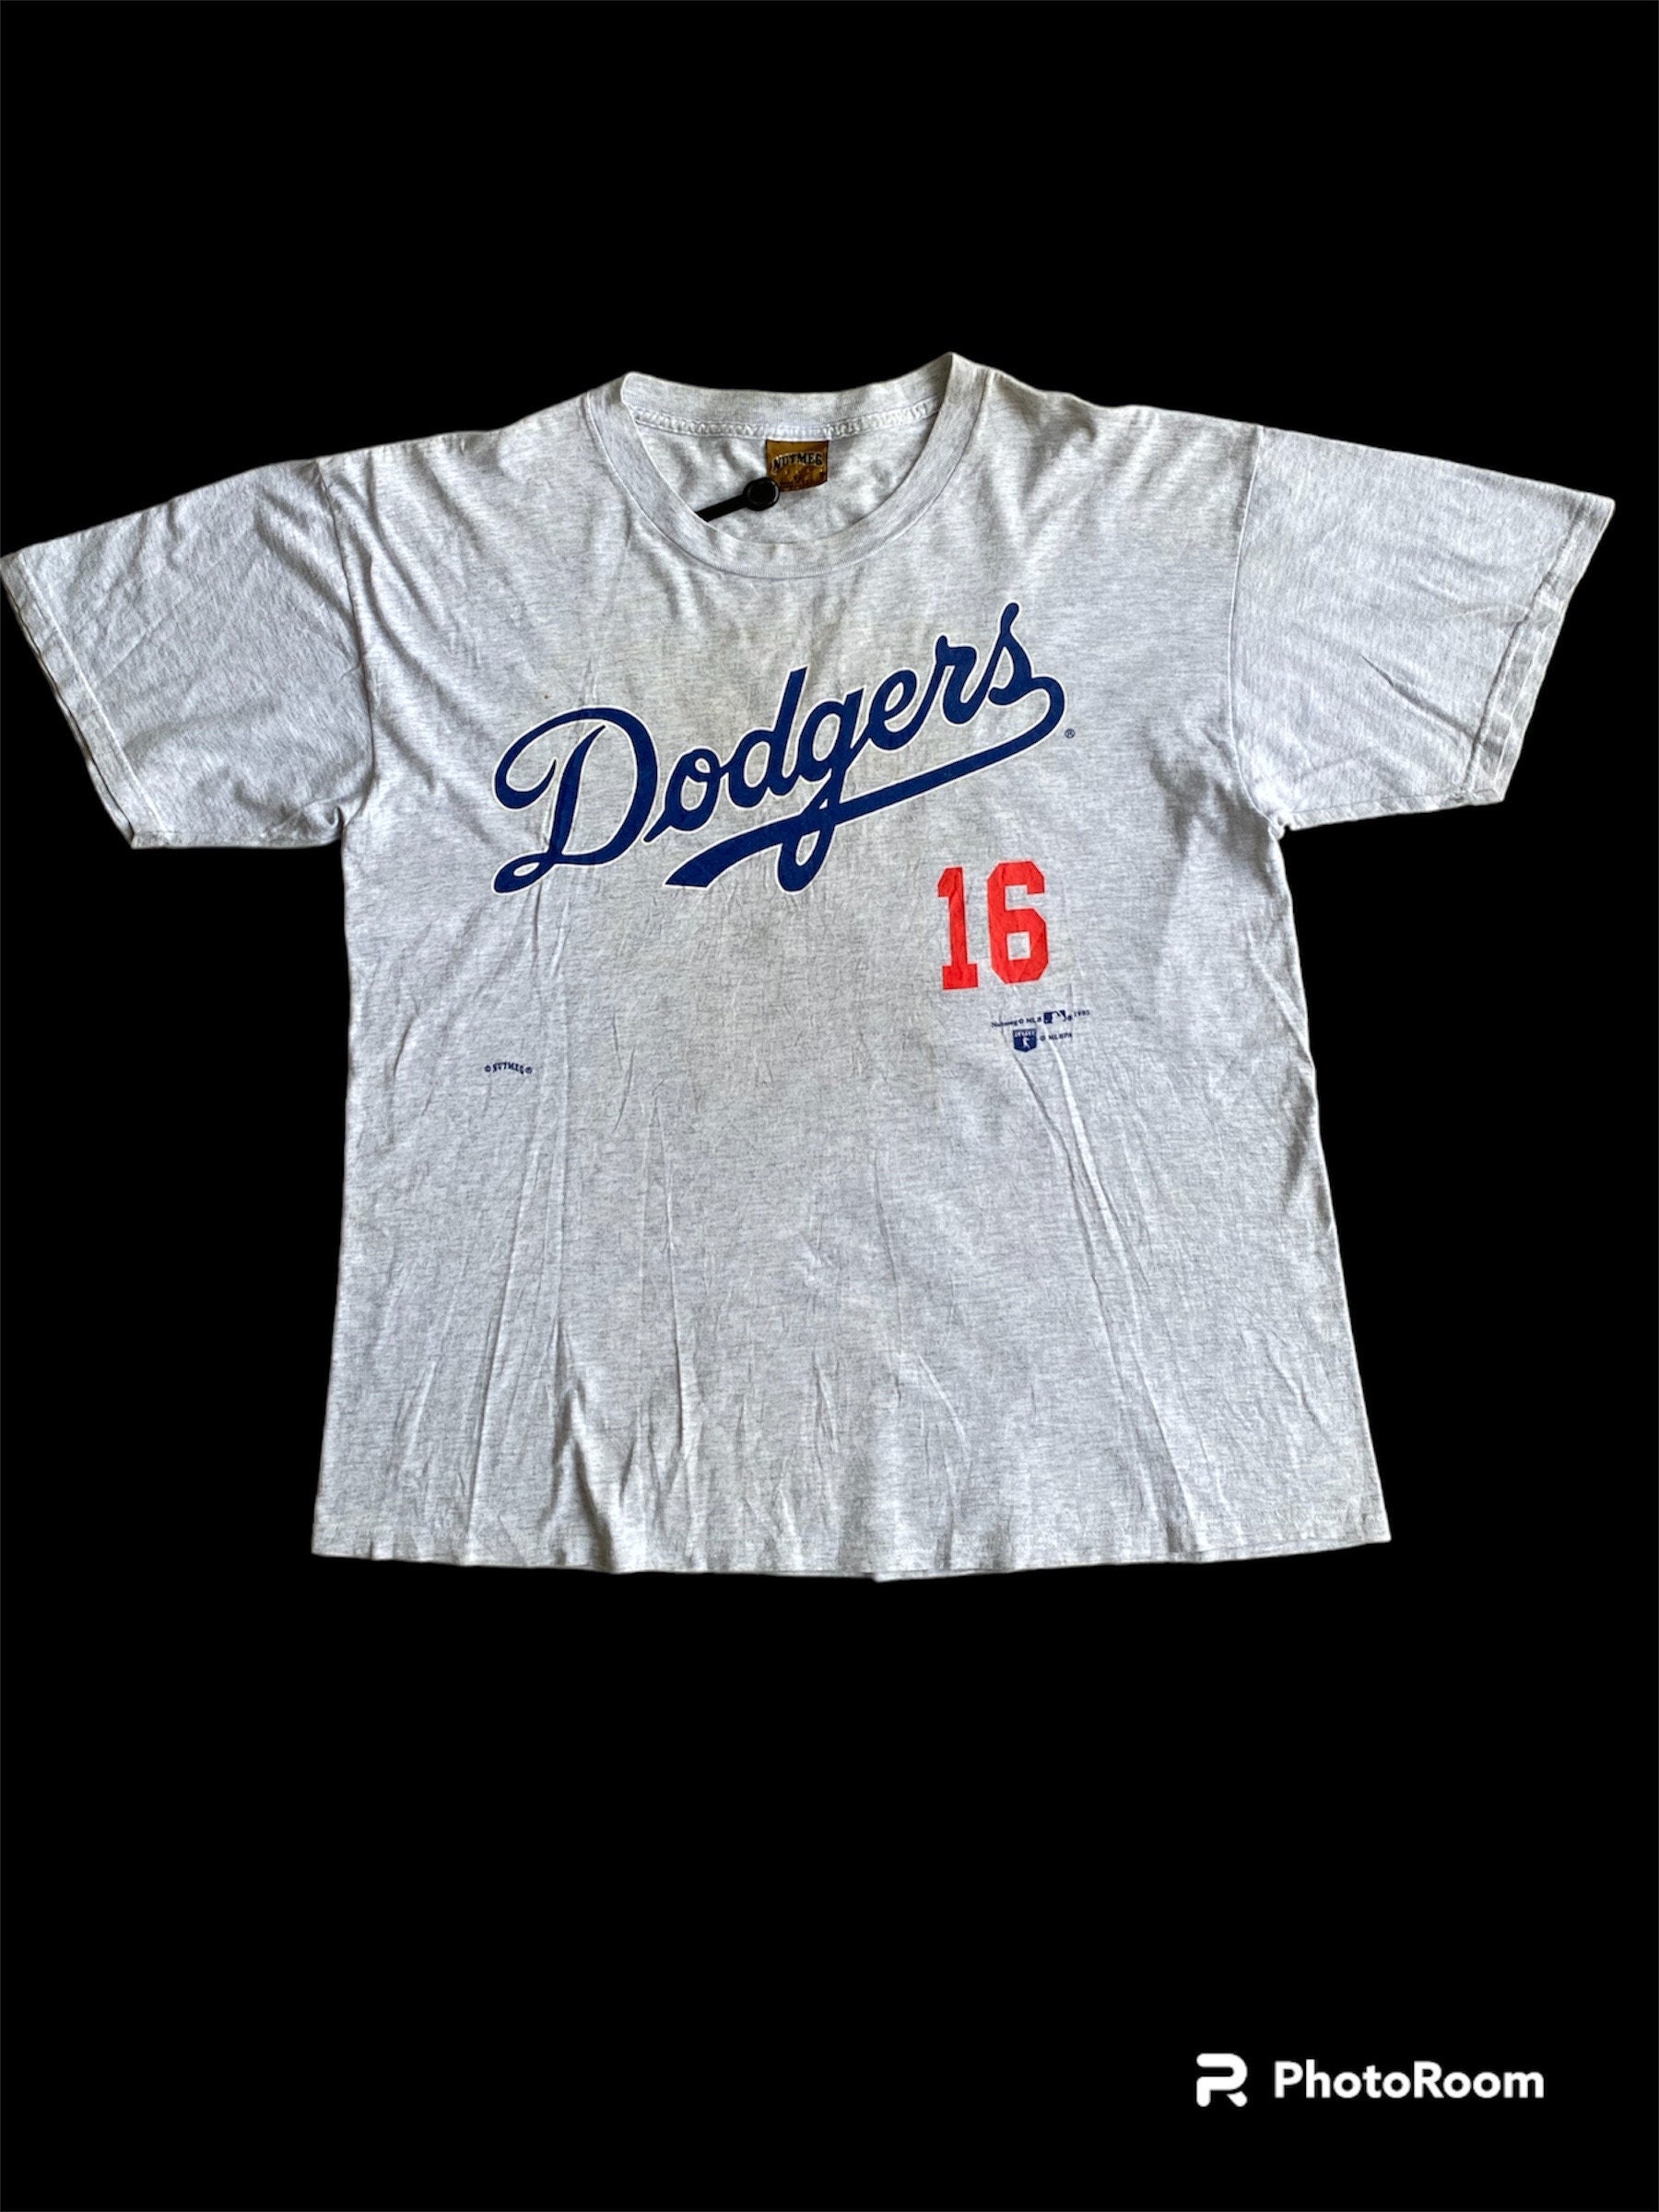 Vintage MLB (Nutmeg) - New York Giants (Mets) Single Stitch T-Shirt 1991 Large